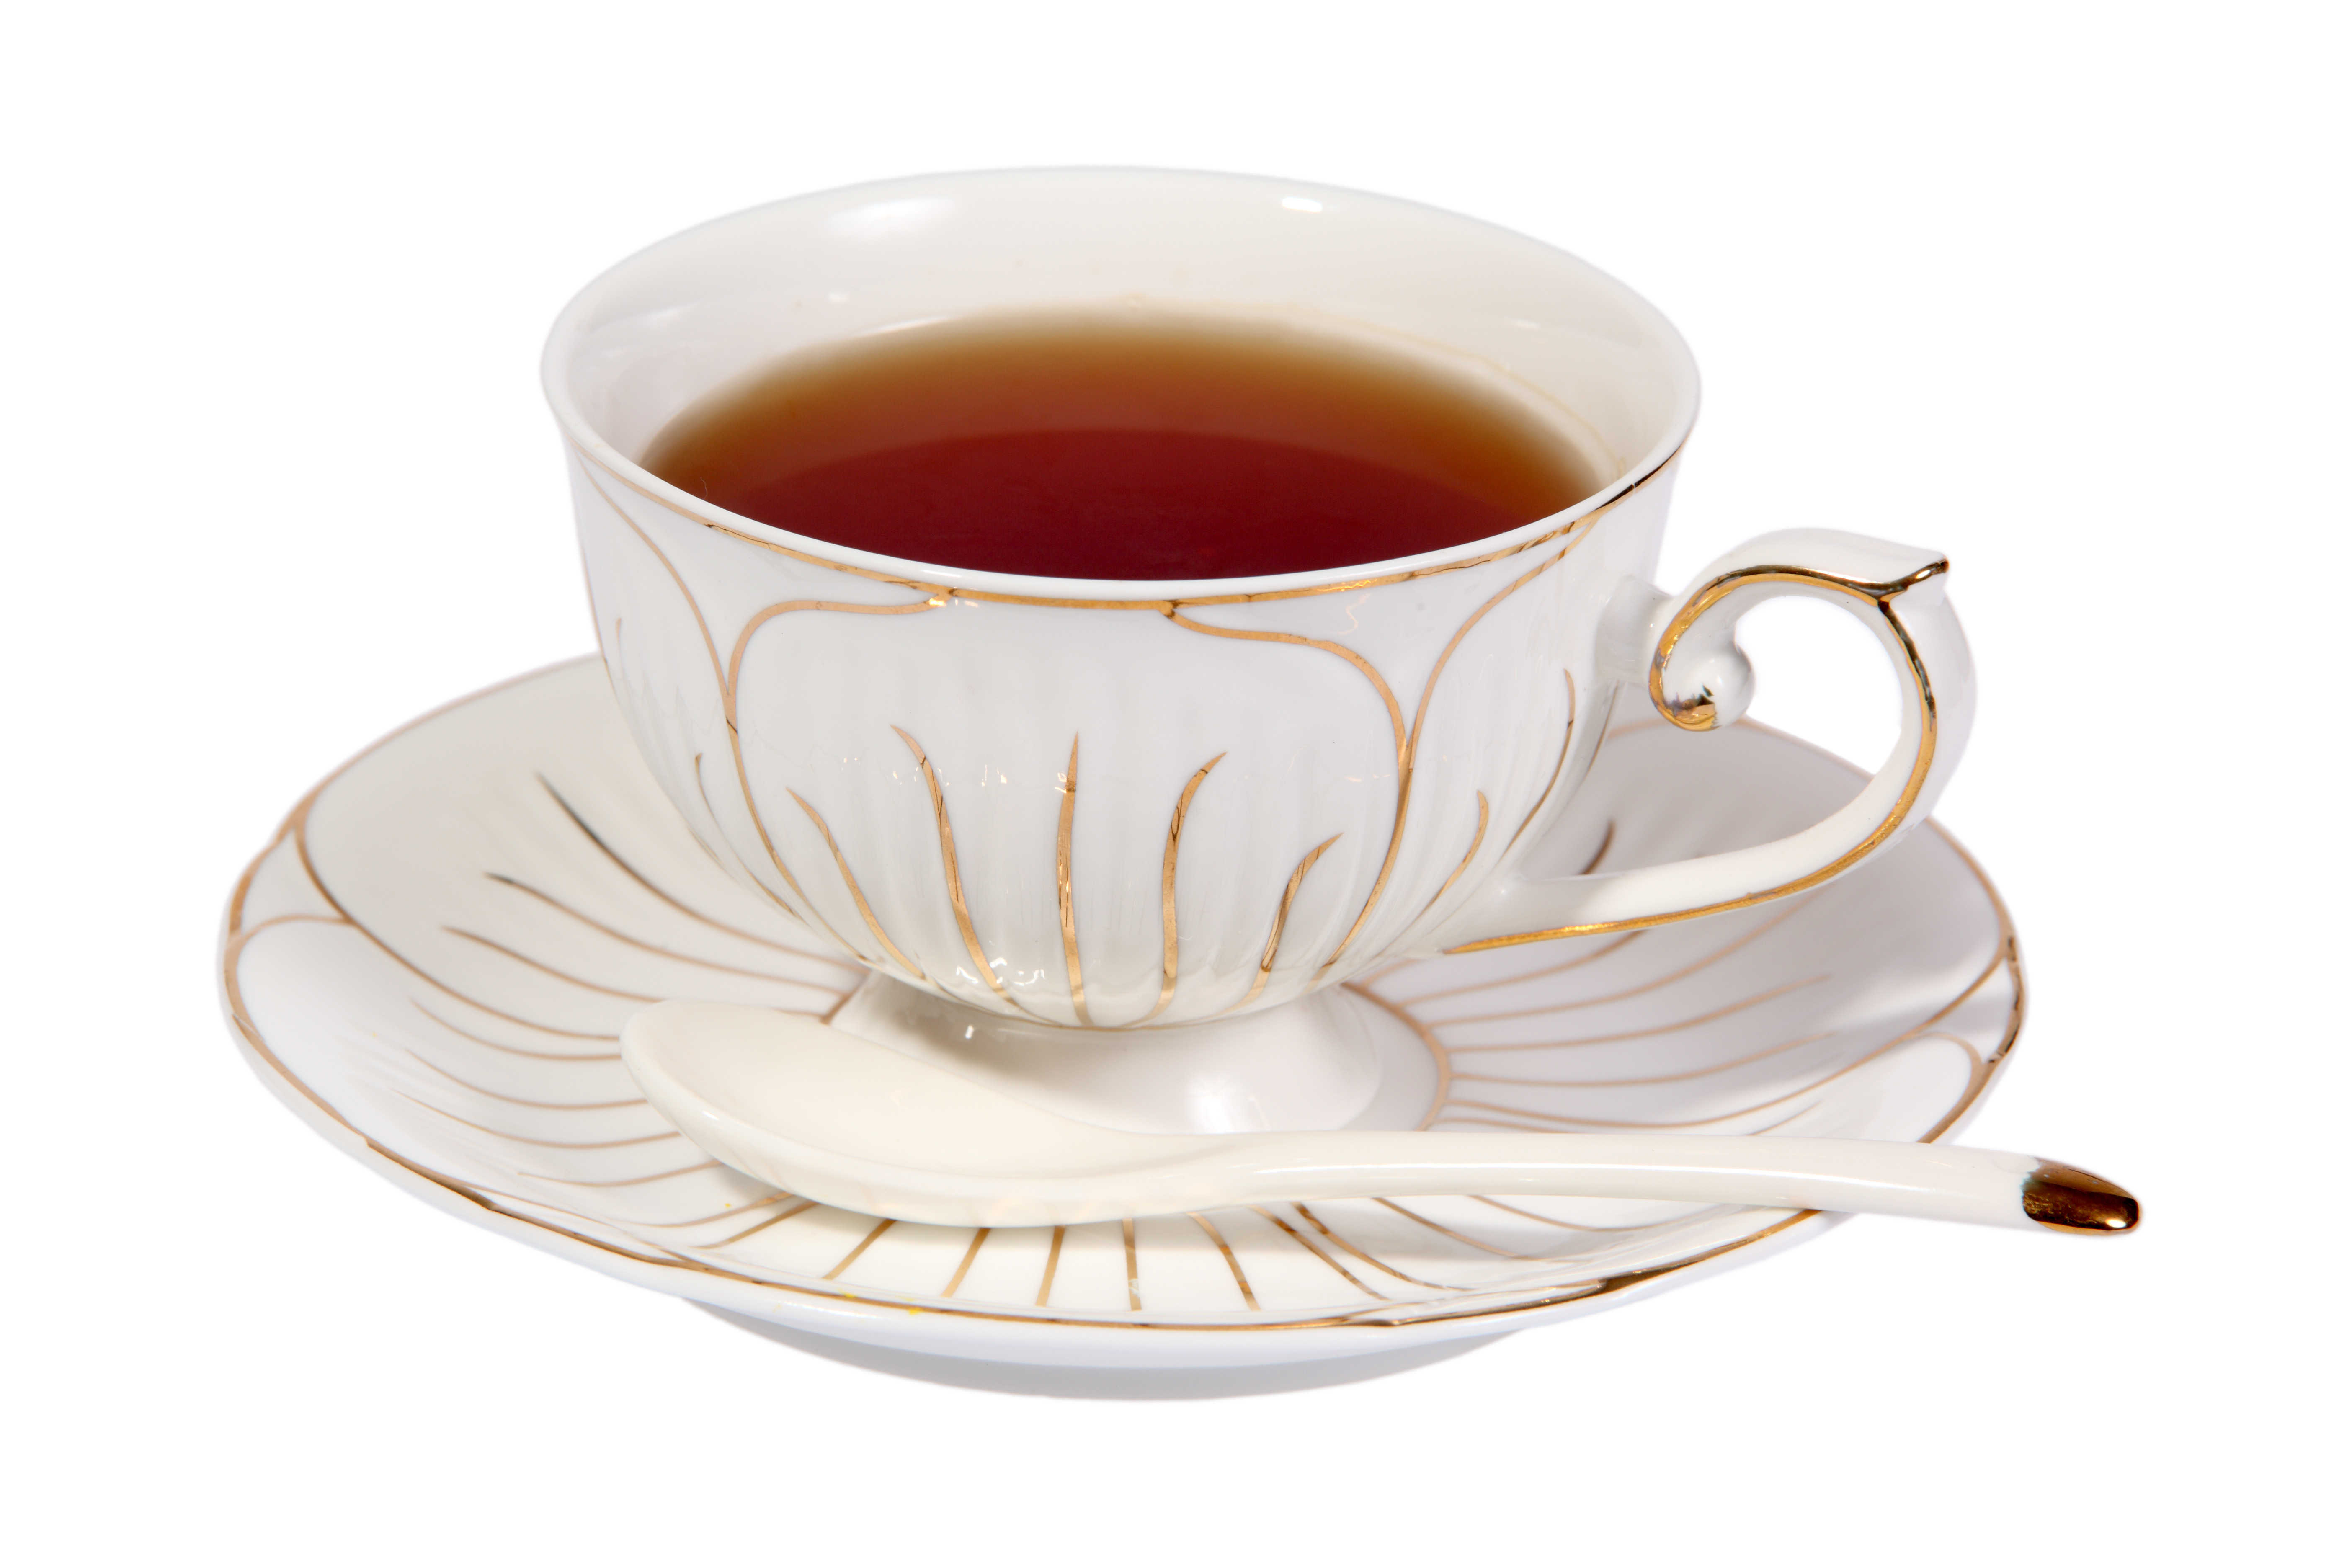 Cup of tea - Kami McBride